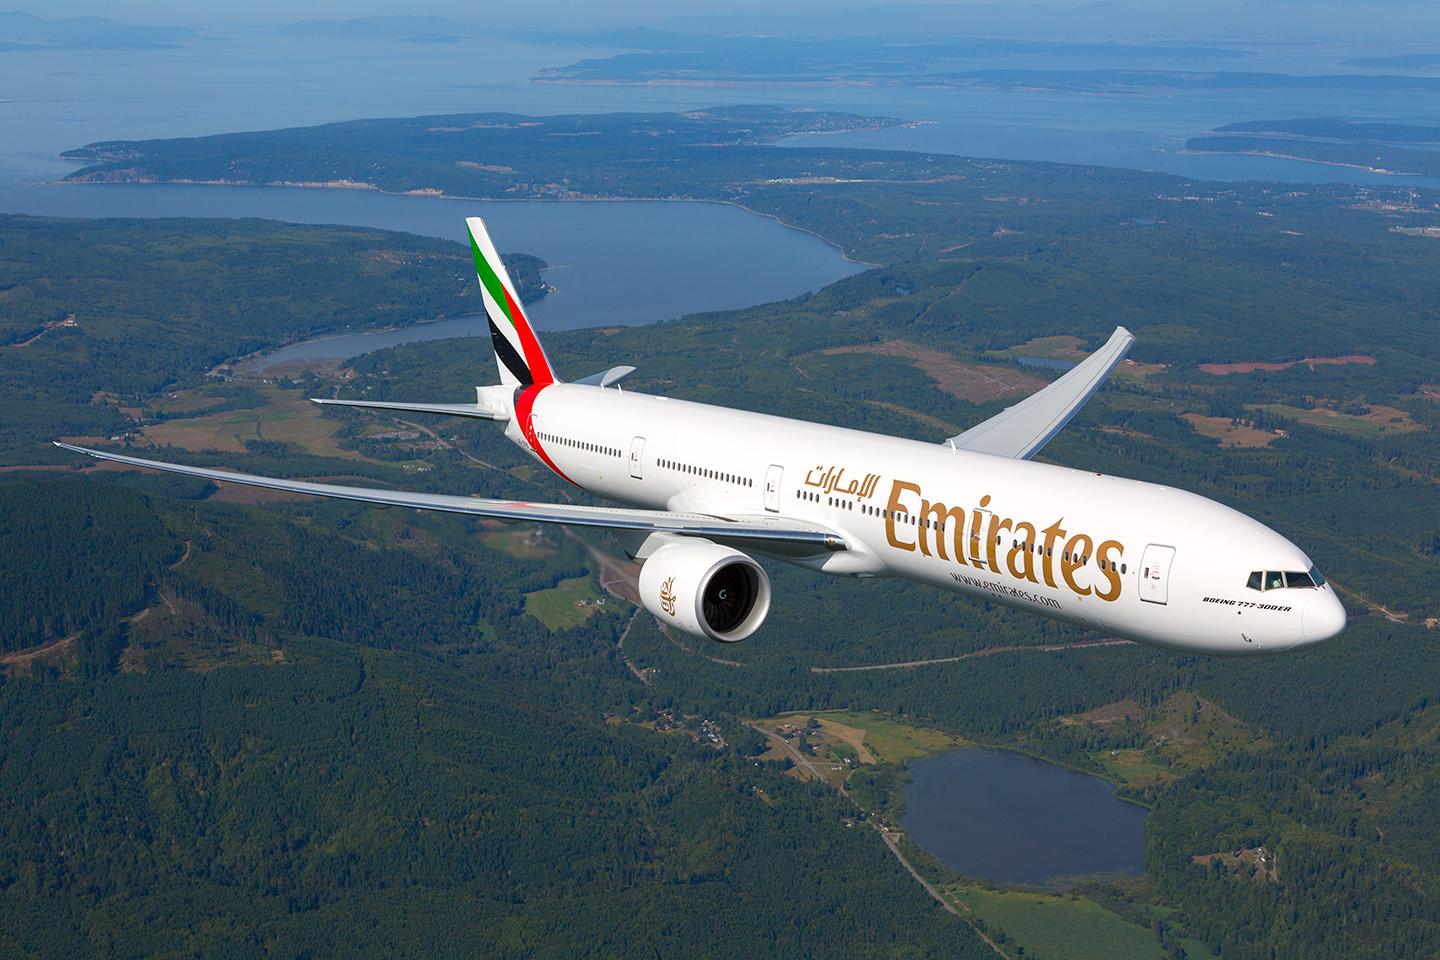 Emirates announces special fares to US destinations